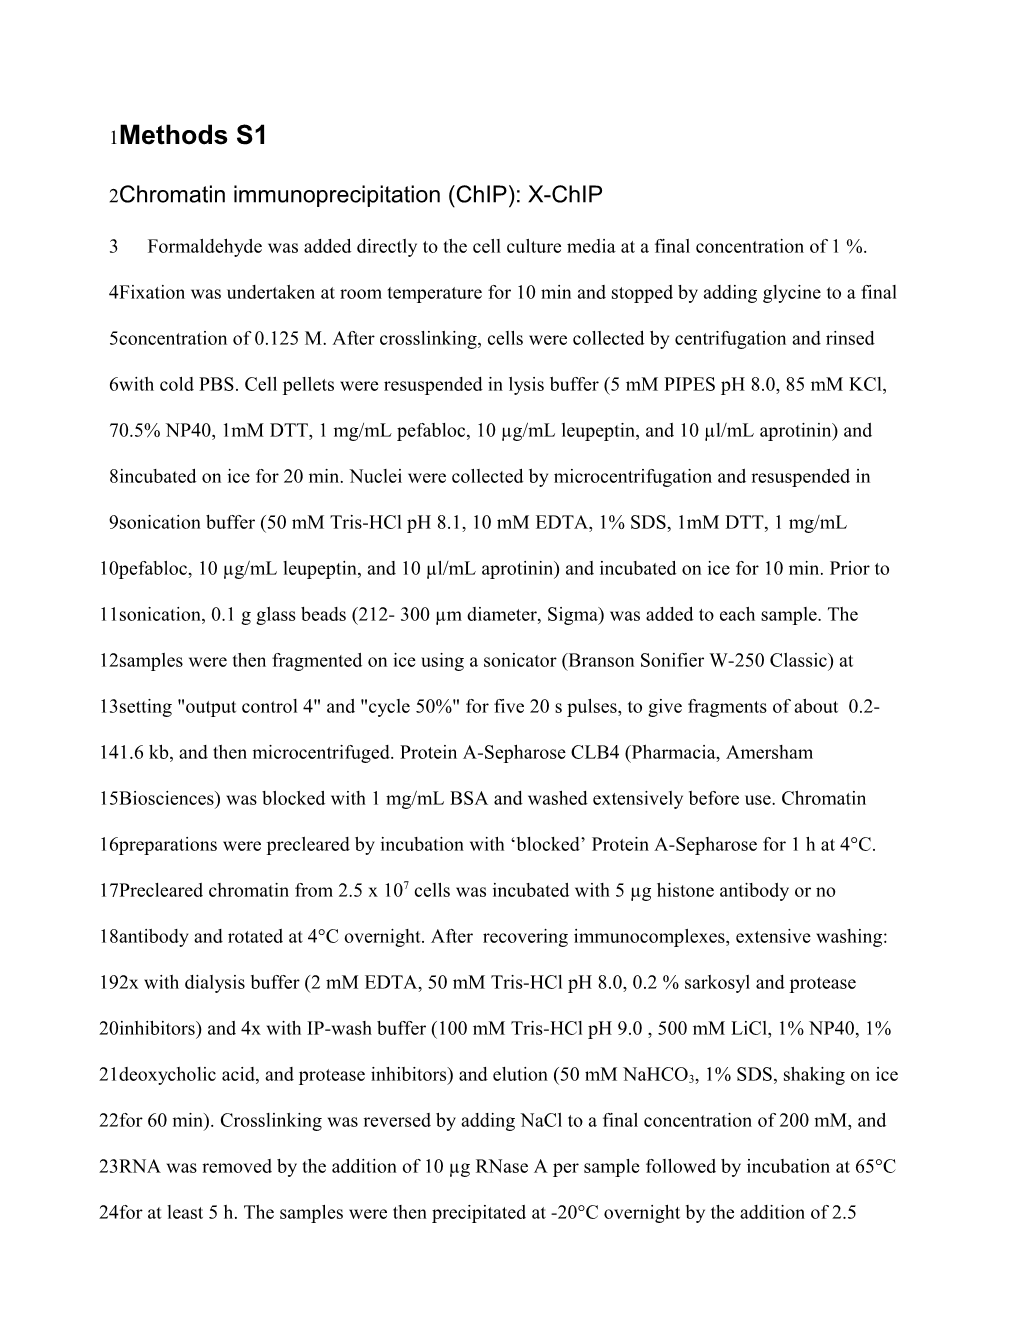 Chromatin Immunoprecipitation (Chip): X-Chip